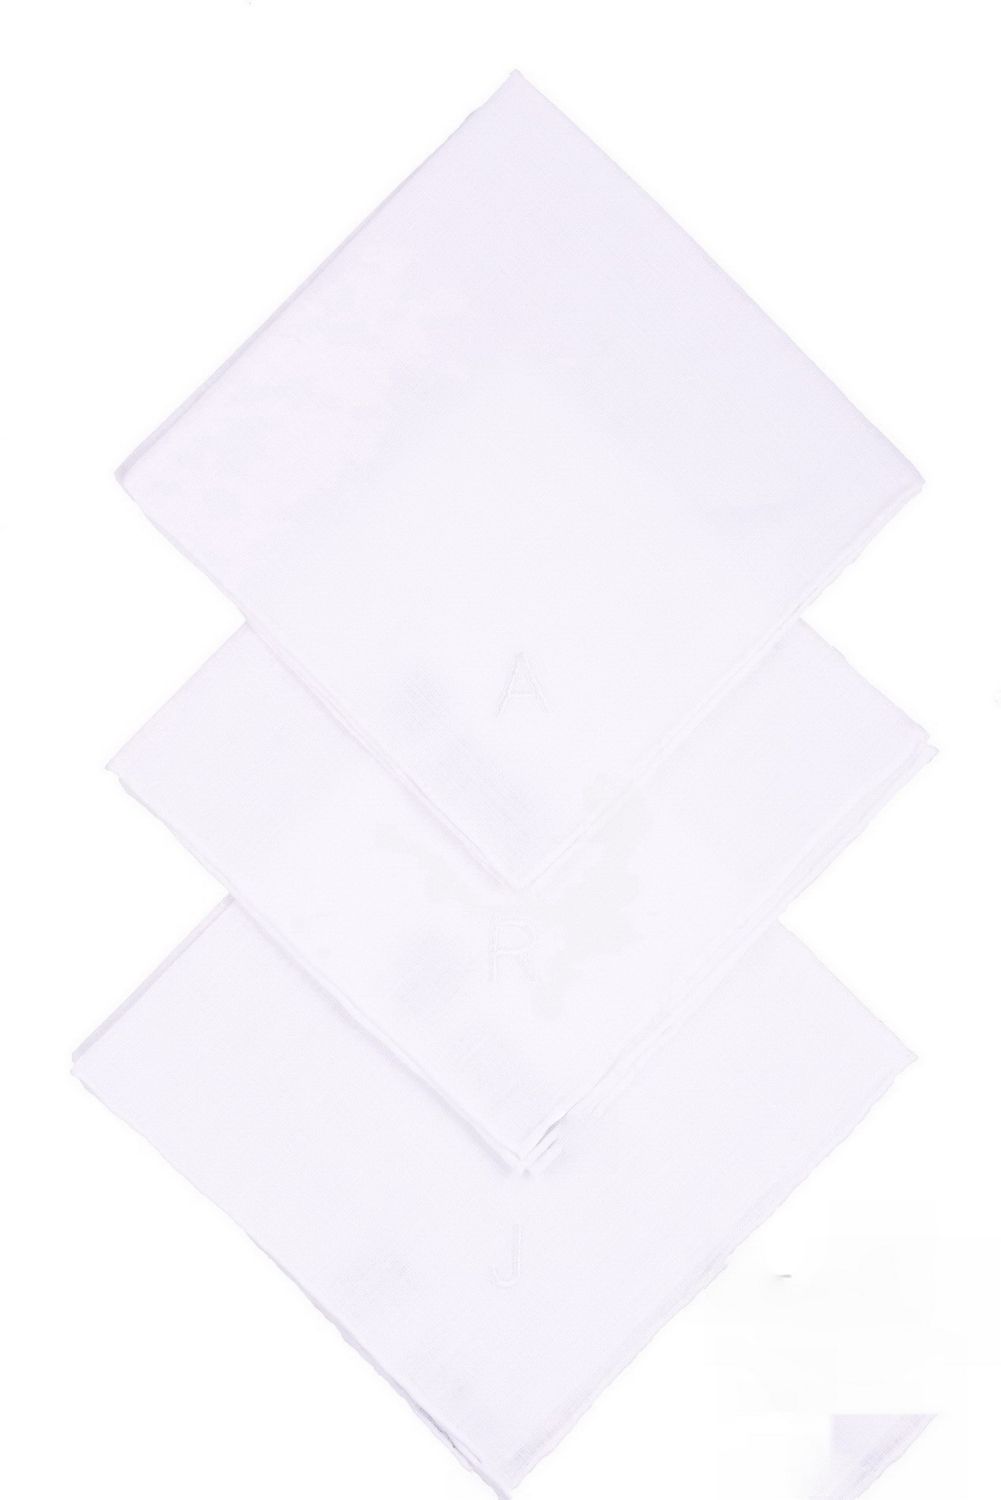 Mens/Gentlemens Plain White Handkerchiefs with Initials Various Pack Sizes 